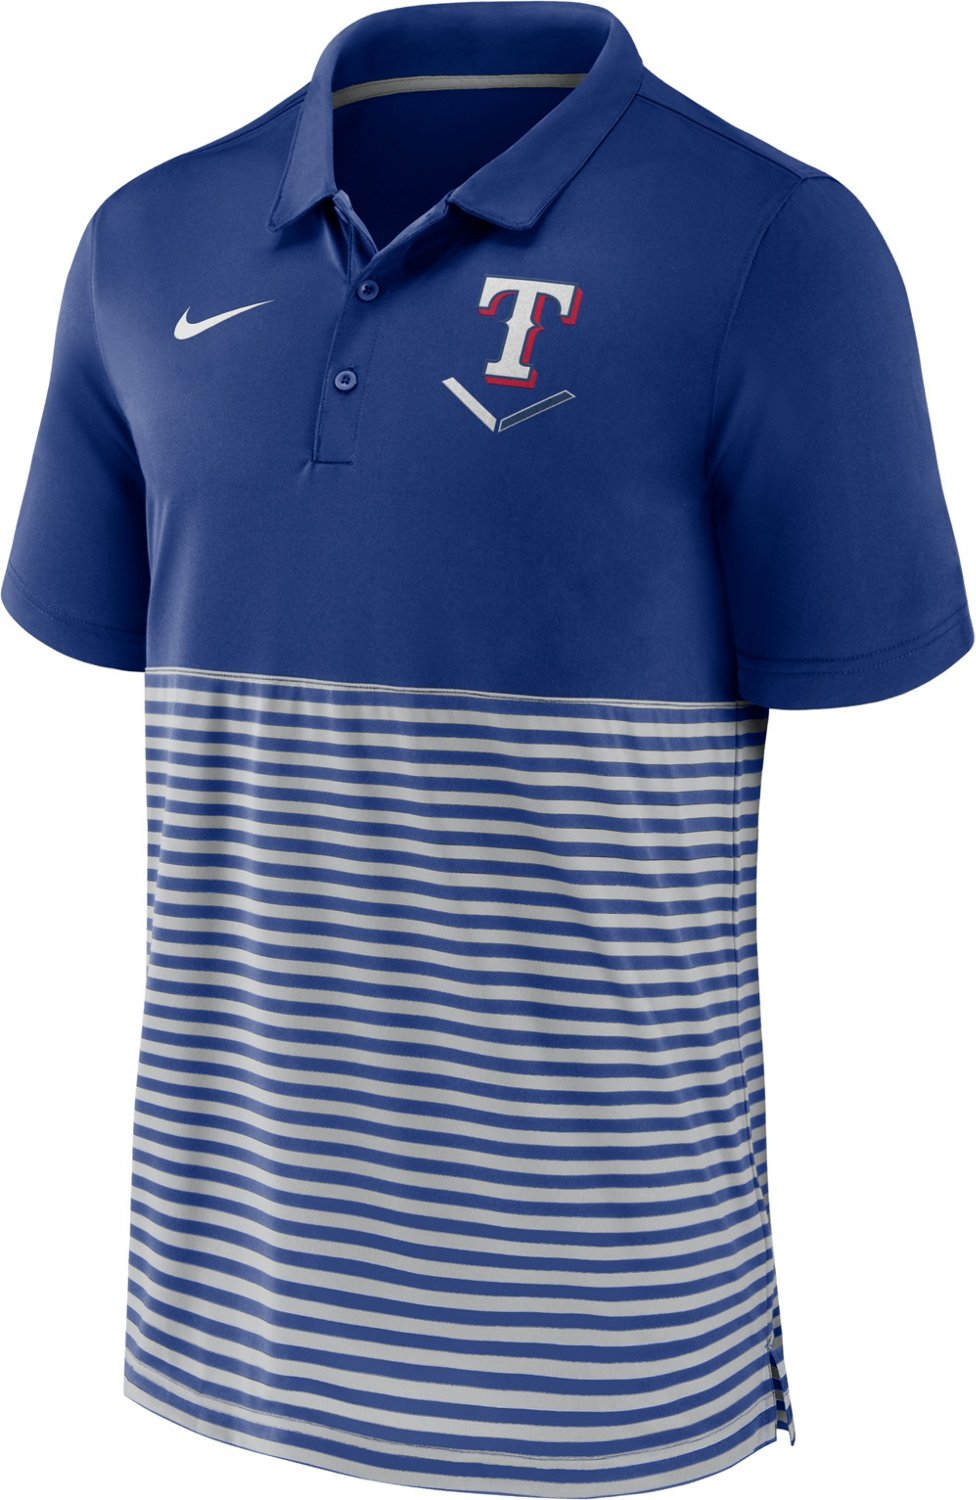 Nike Men's Texas Rangers Home Plate Striped Short Sleeve Polo Shirt ...